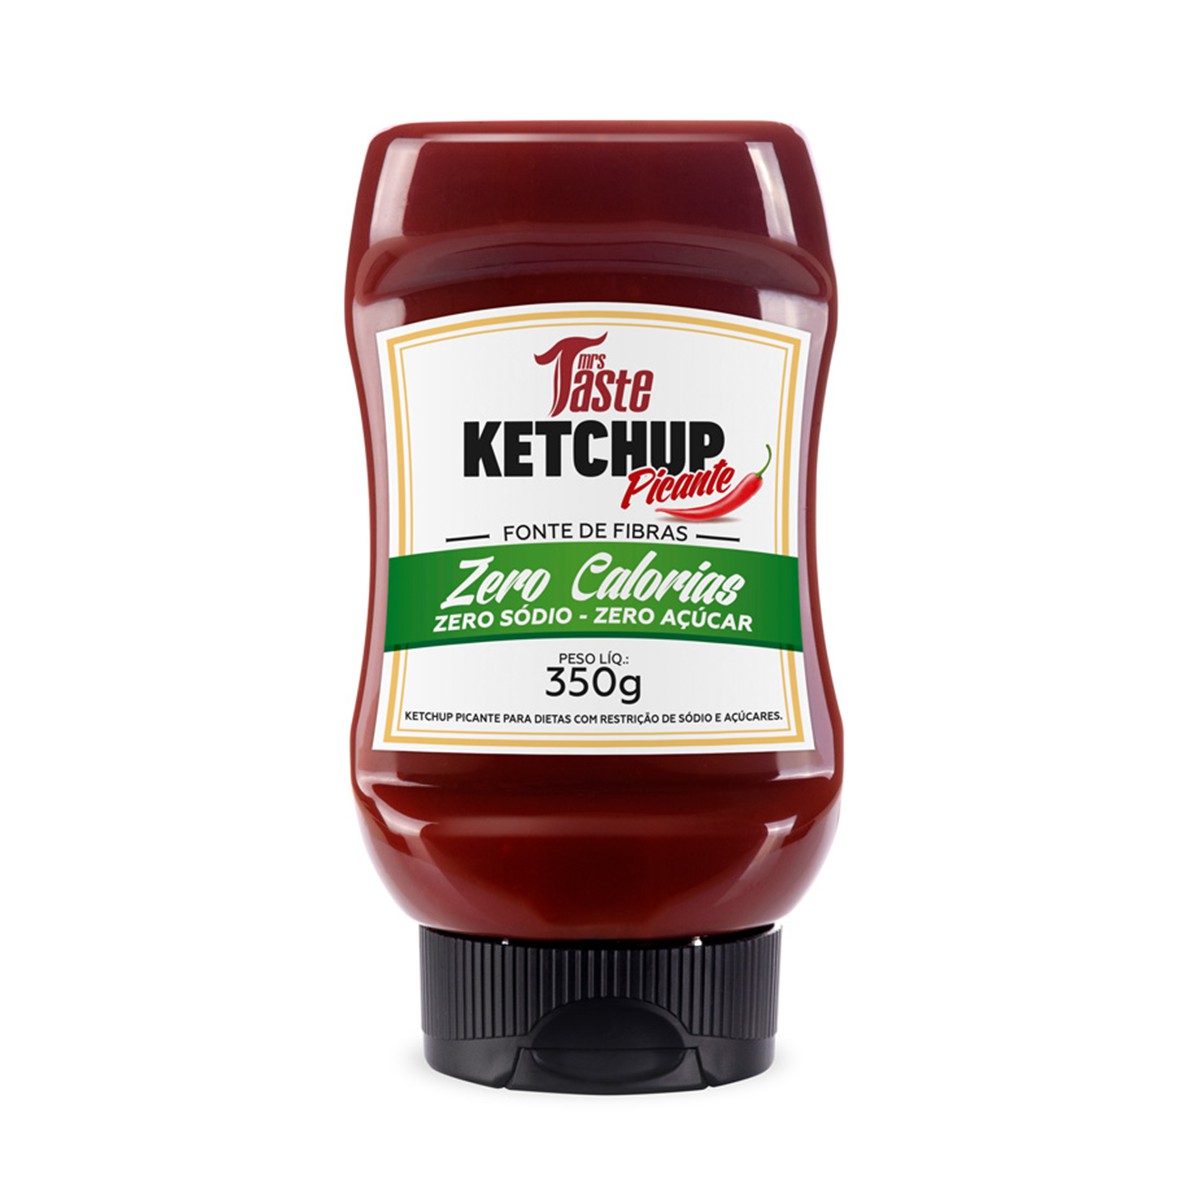 Ketchup Picante 350g  Mrs Taste